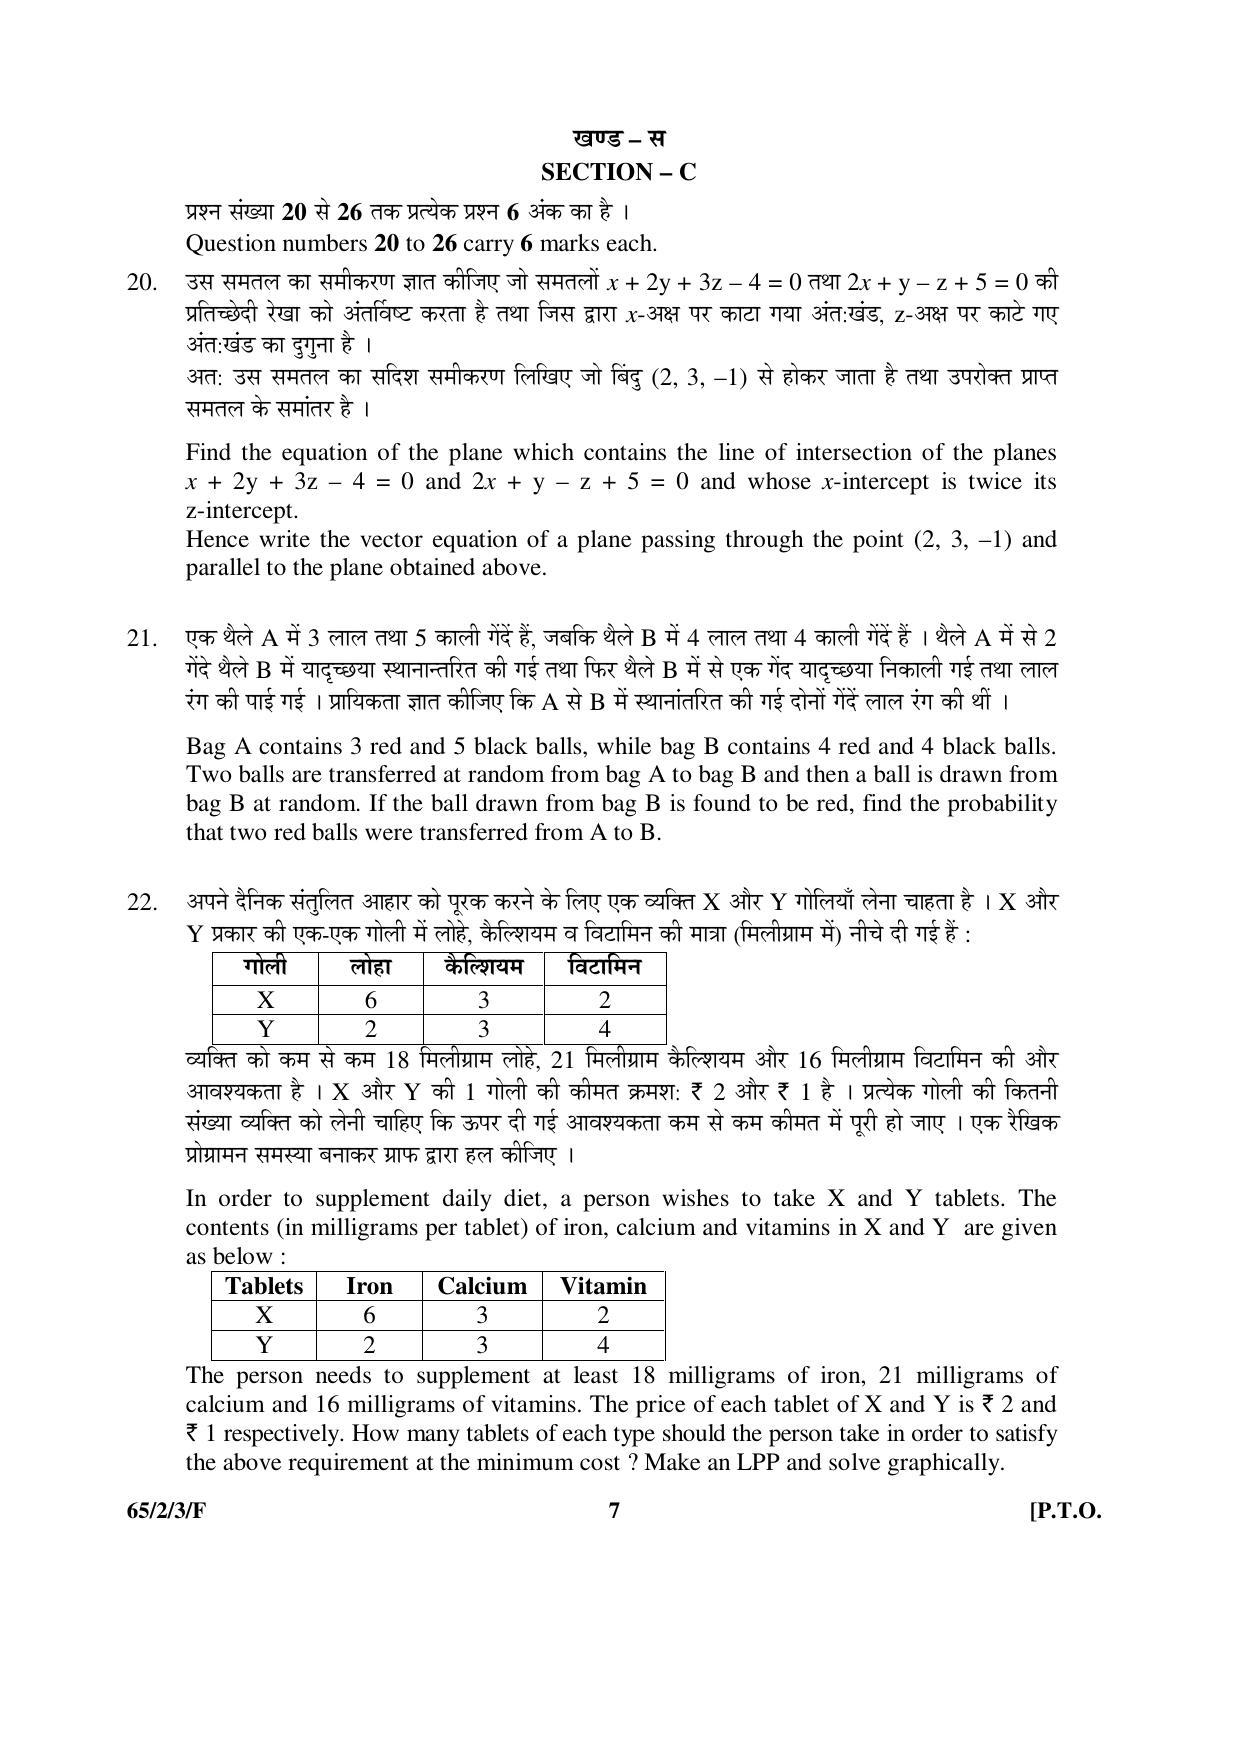 CBSE Class 12 65-2-3-F _Mathematics_ 2016 Question Paper - Page 7